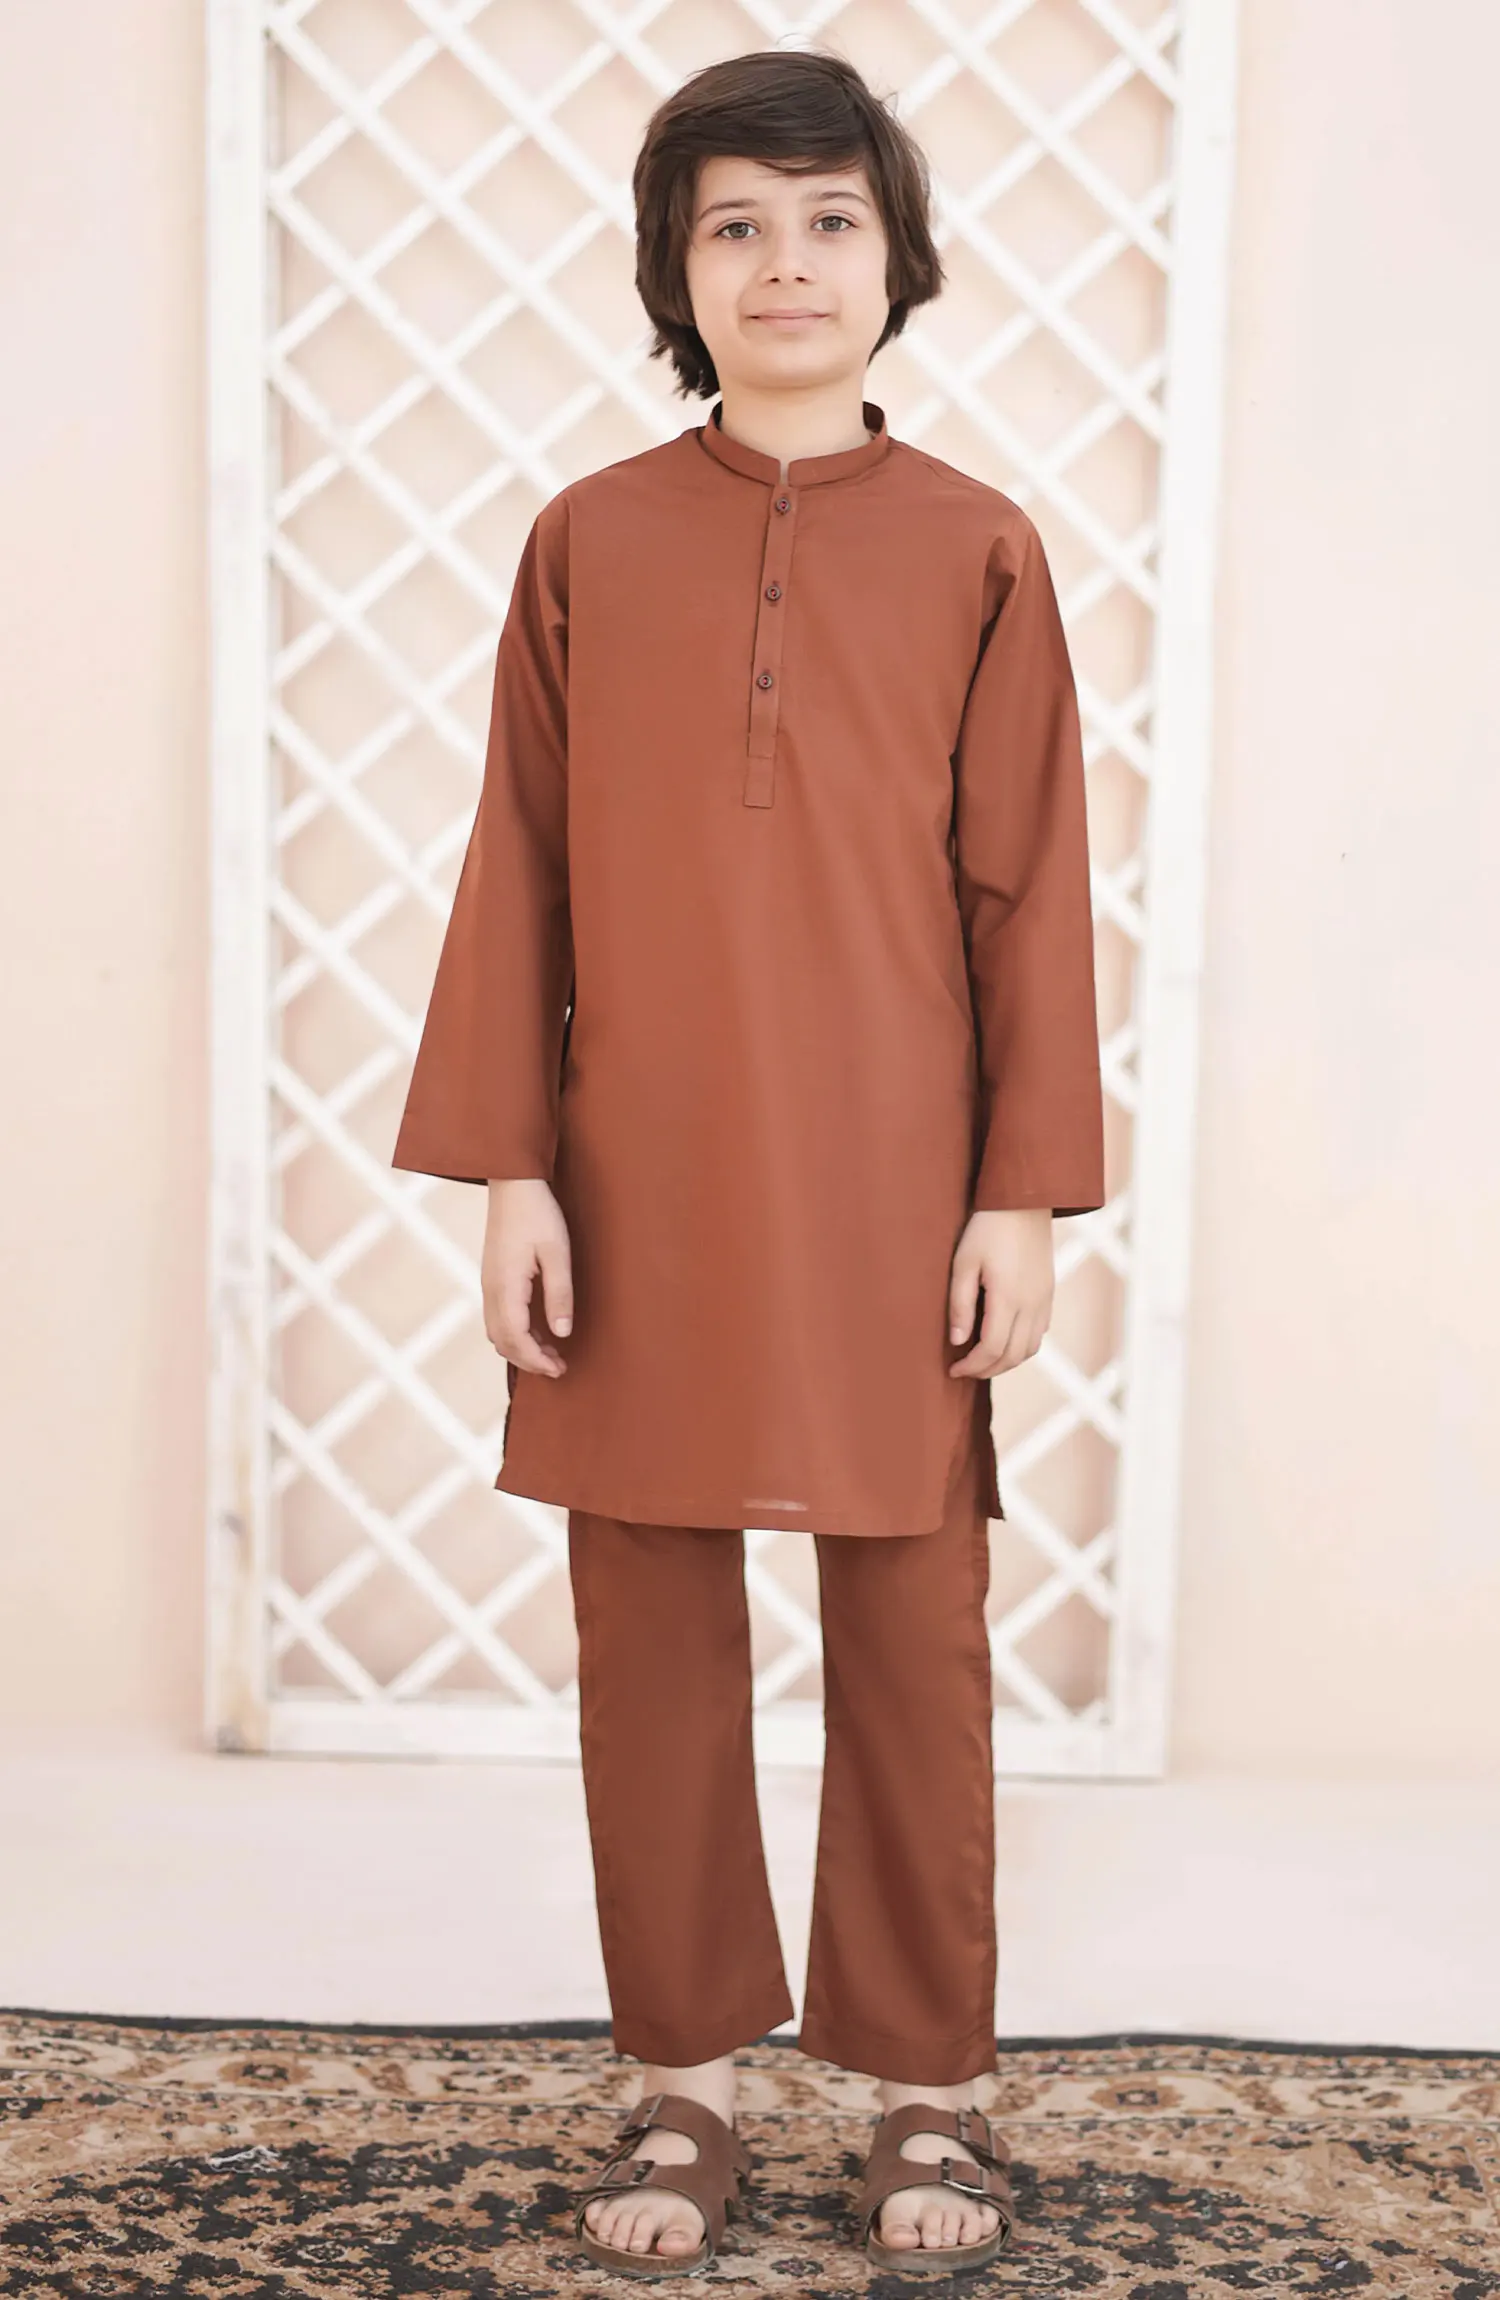 Ramazan Edit Kurta Trouser Collection By Hassan Jee - KT 21 Caramel Brown Kurta Trouser